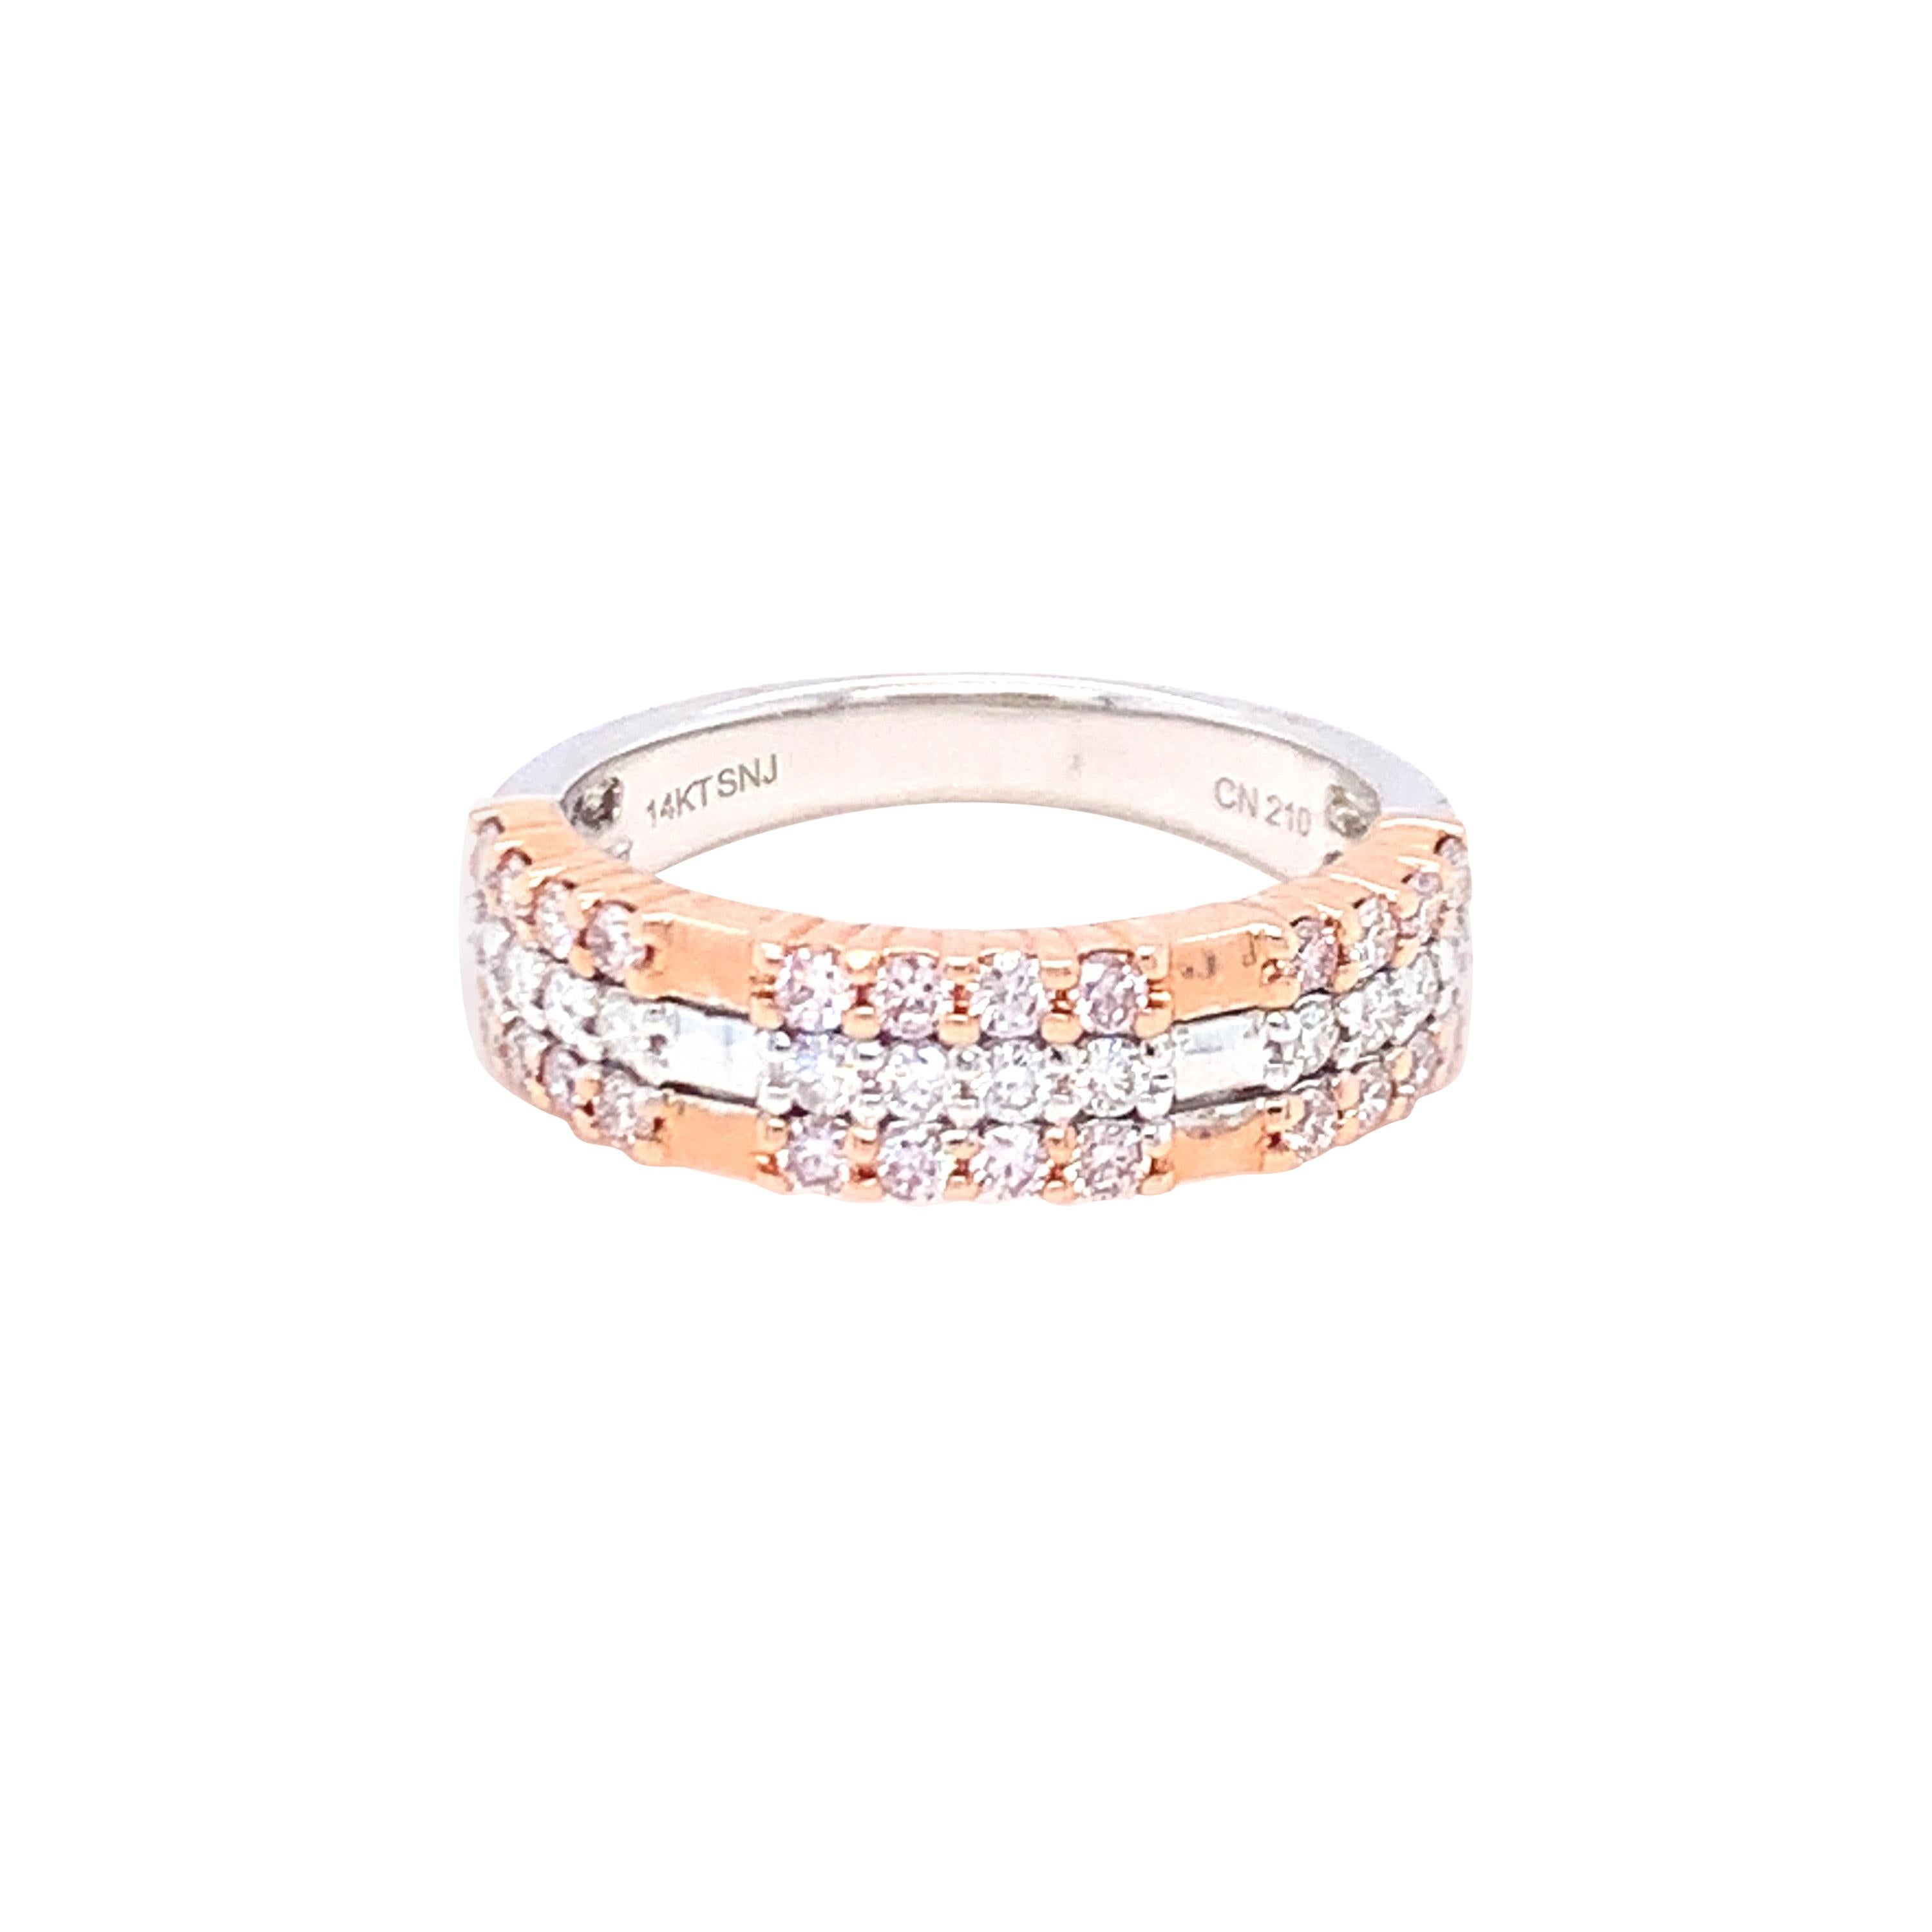 0.69 Carat Pink & White Diamond Band Ring in 14k Two Tone Gold